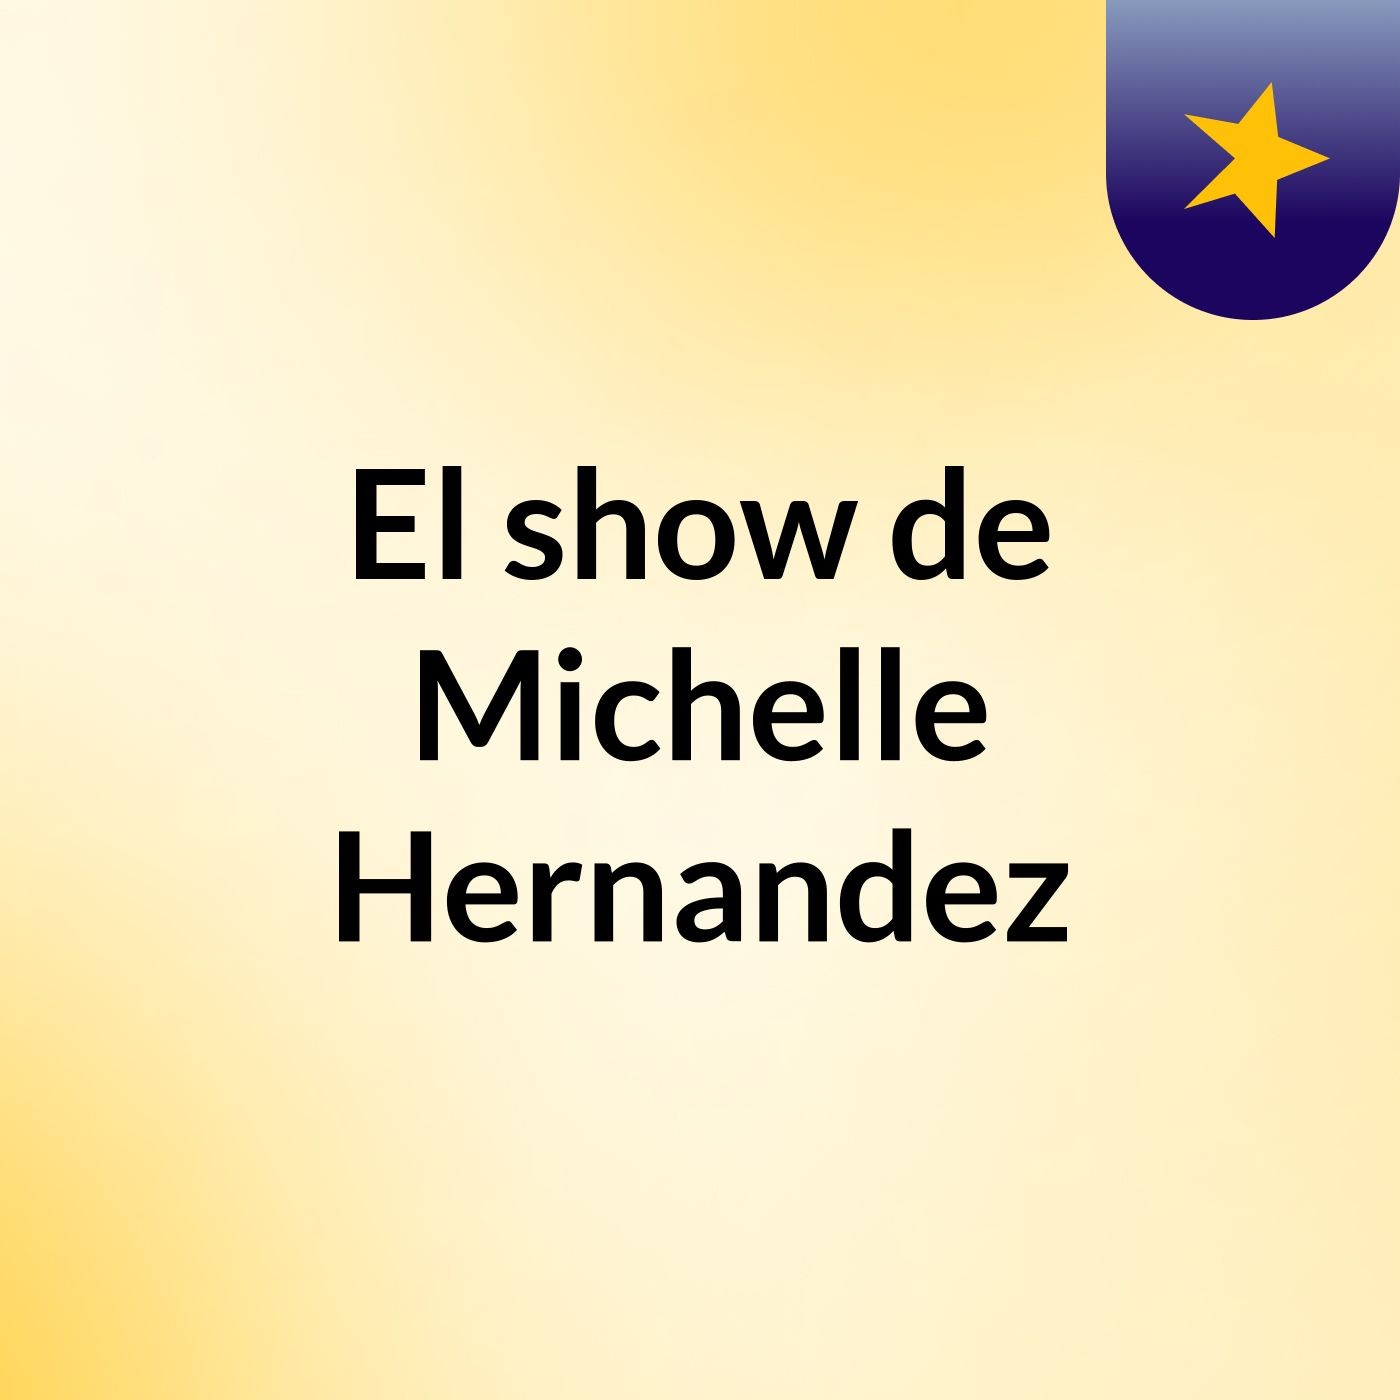 El show de Michelle Hernandez